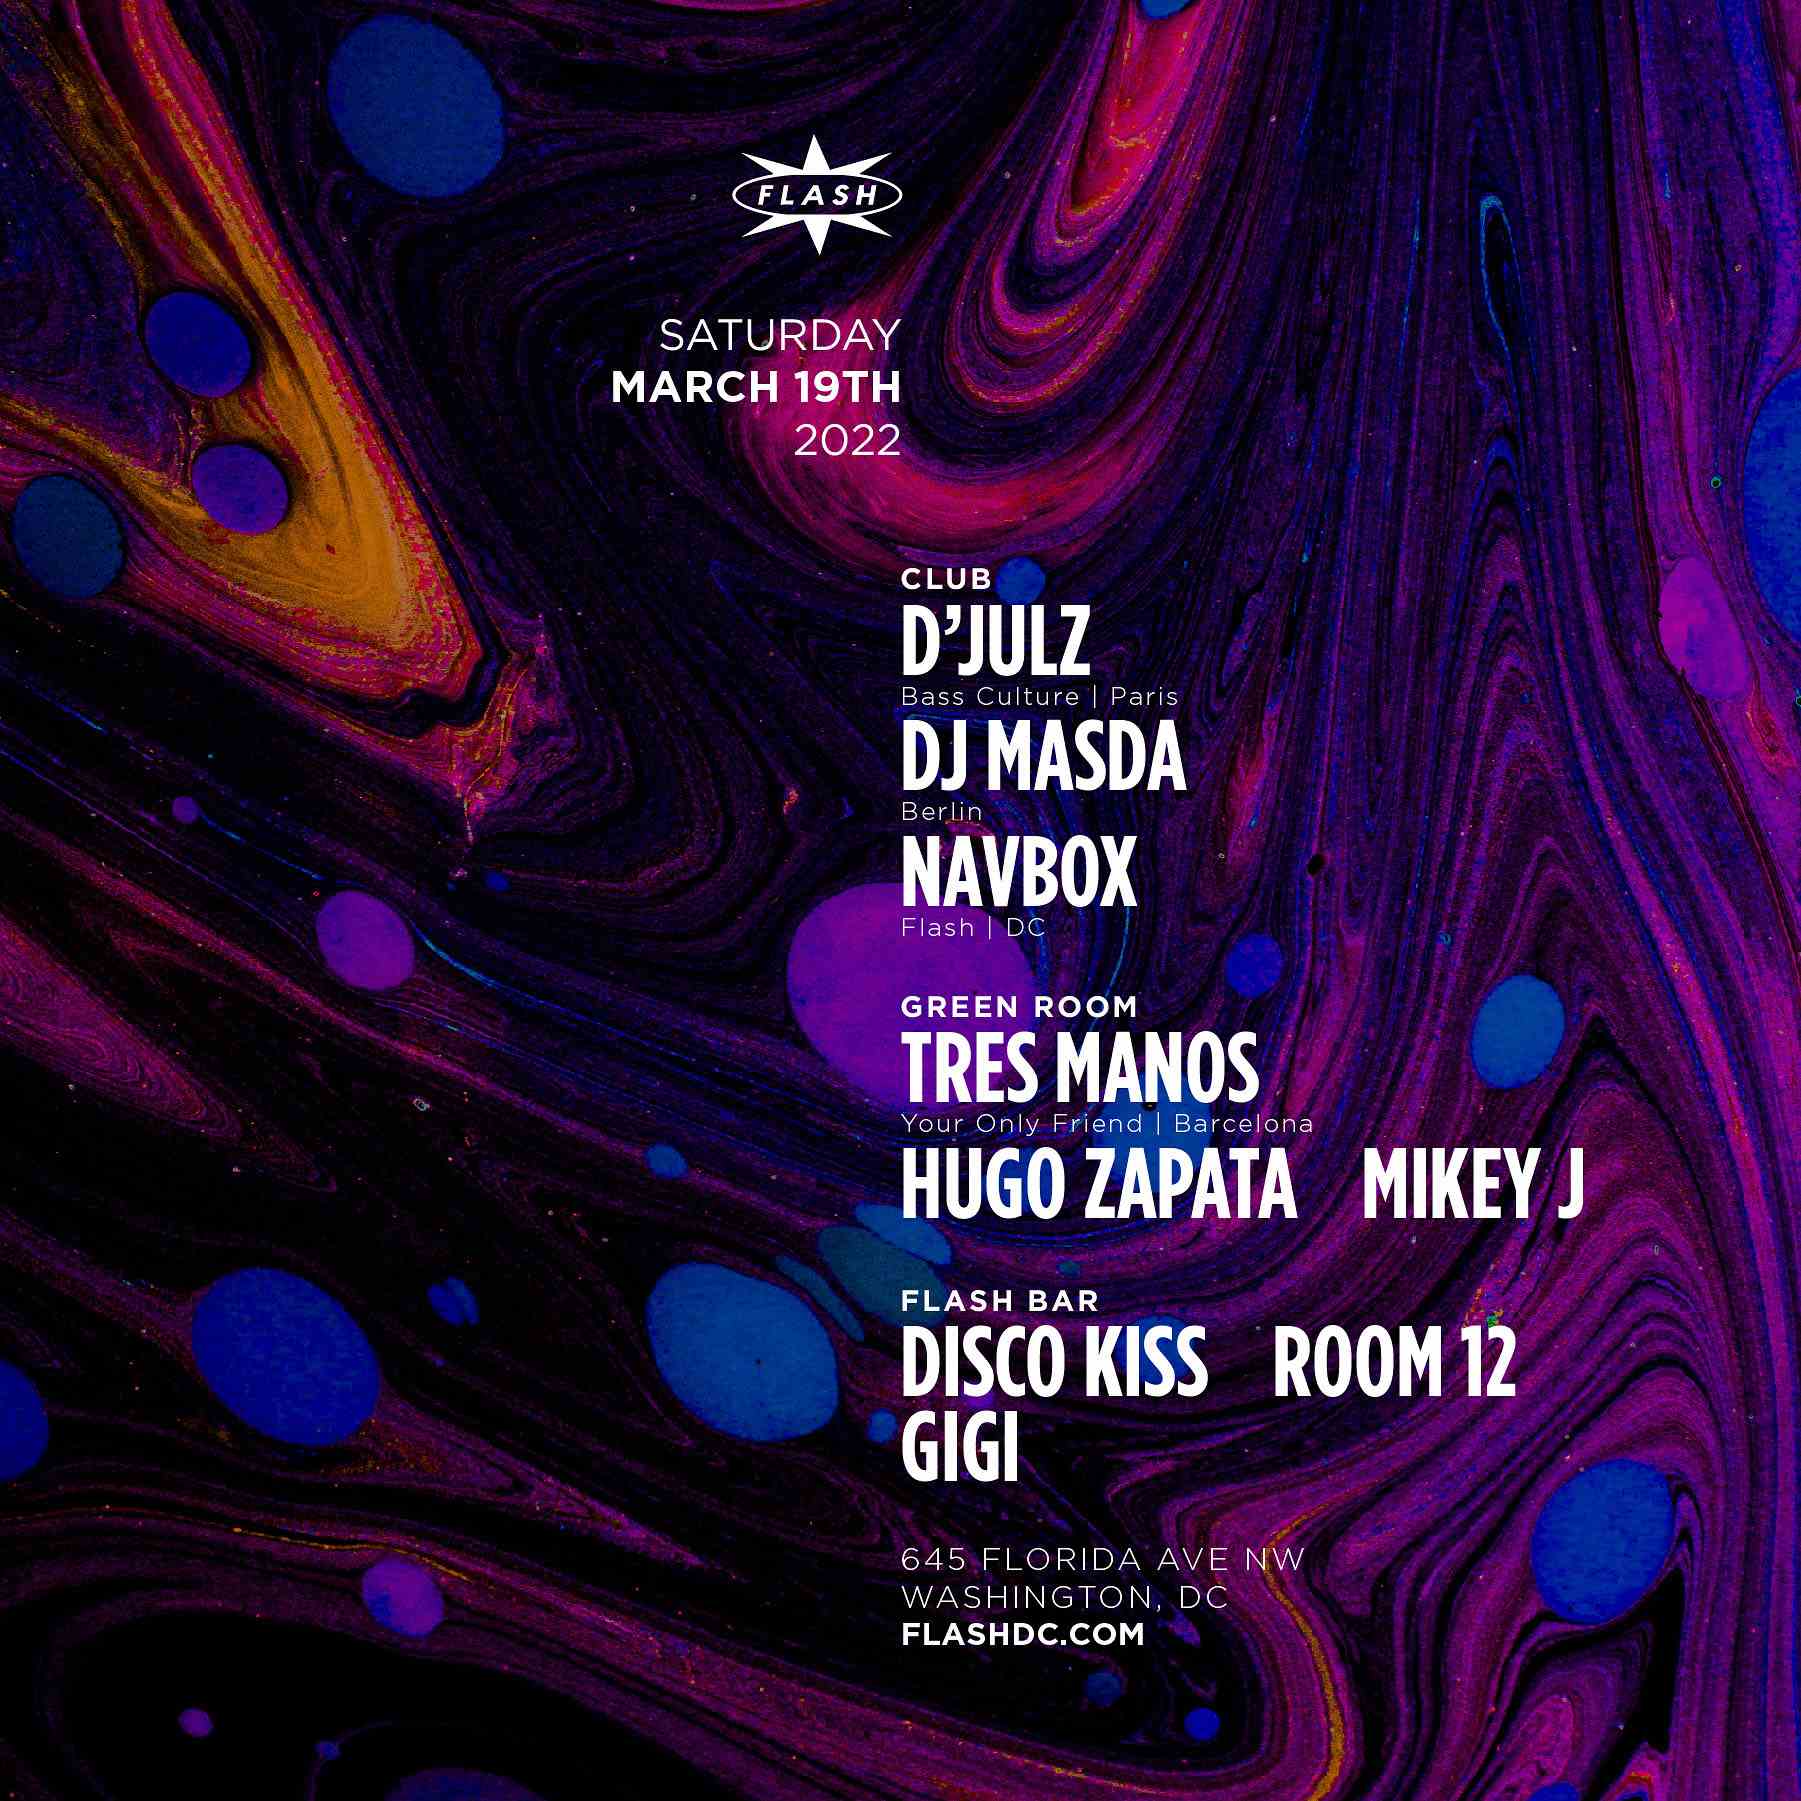 D’JULZ - DJ MASDA - Navbox at Flash on Saturday, March 19, 2022